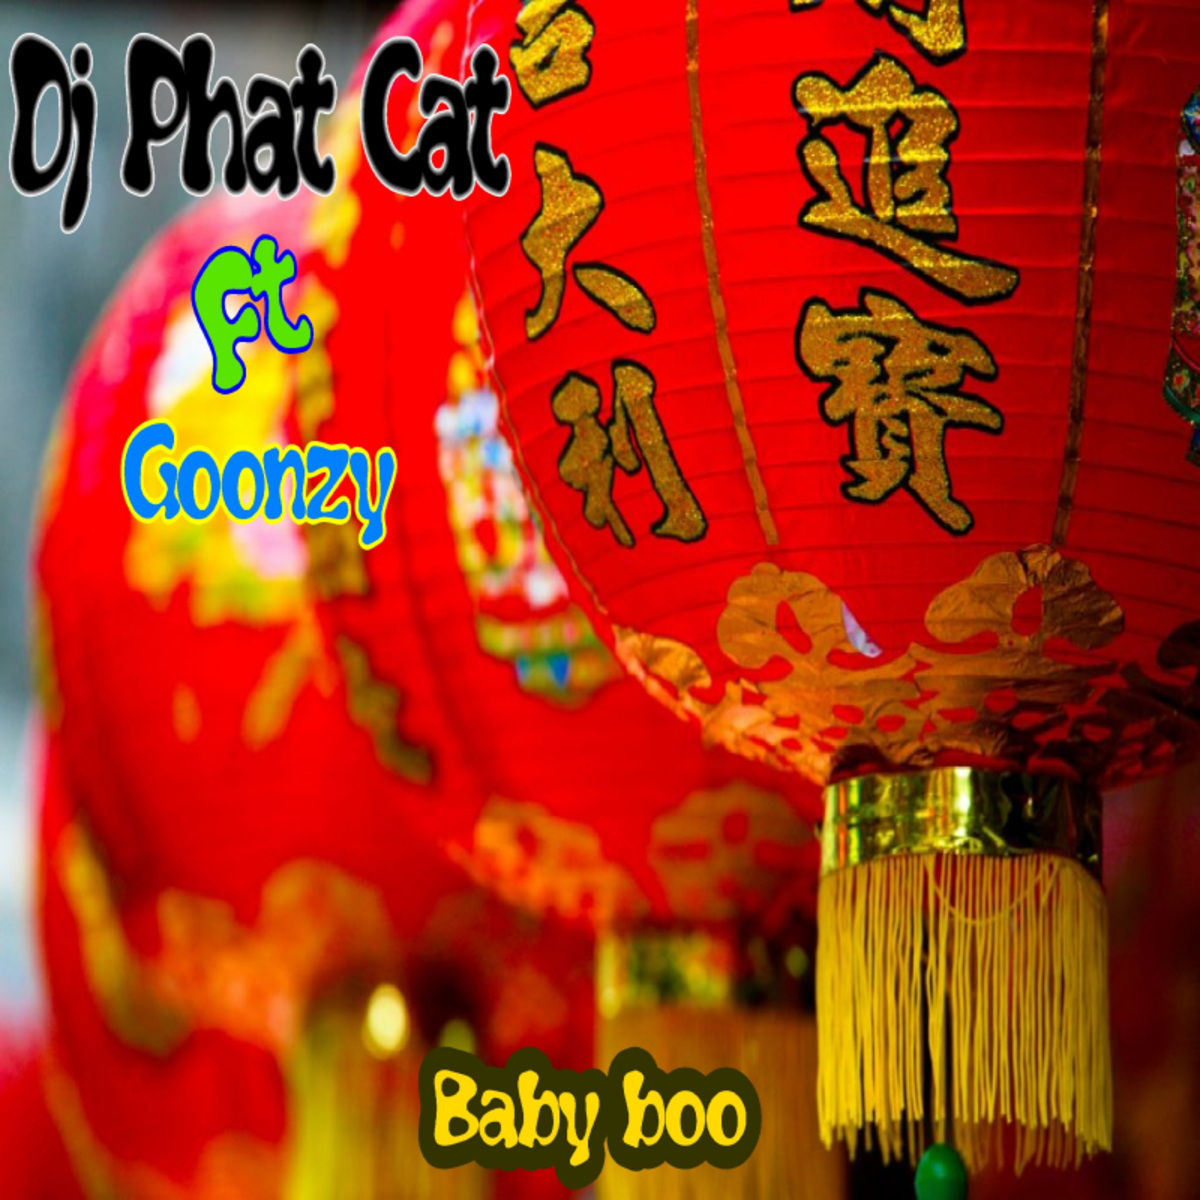 Dj Phat Cat ft Goonzy, Goonzy - Baby Boo / Phat Cat Productions